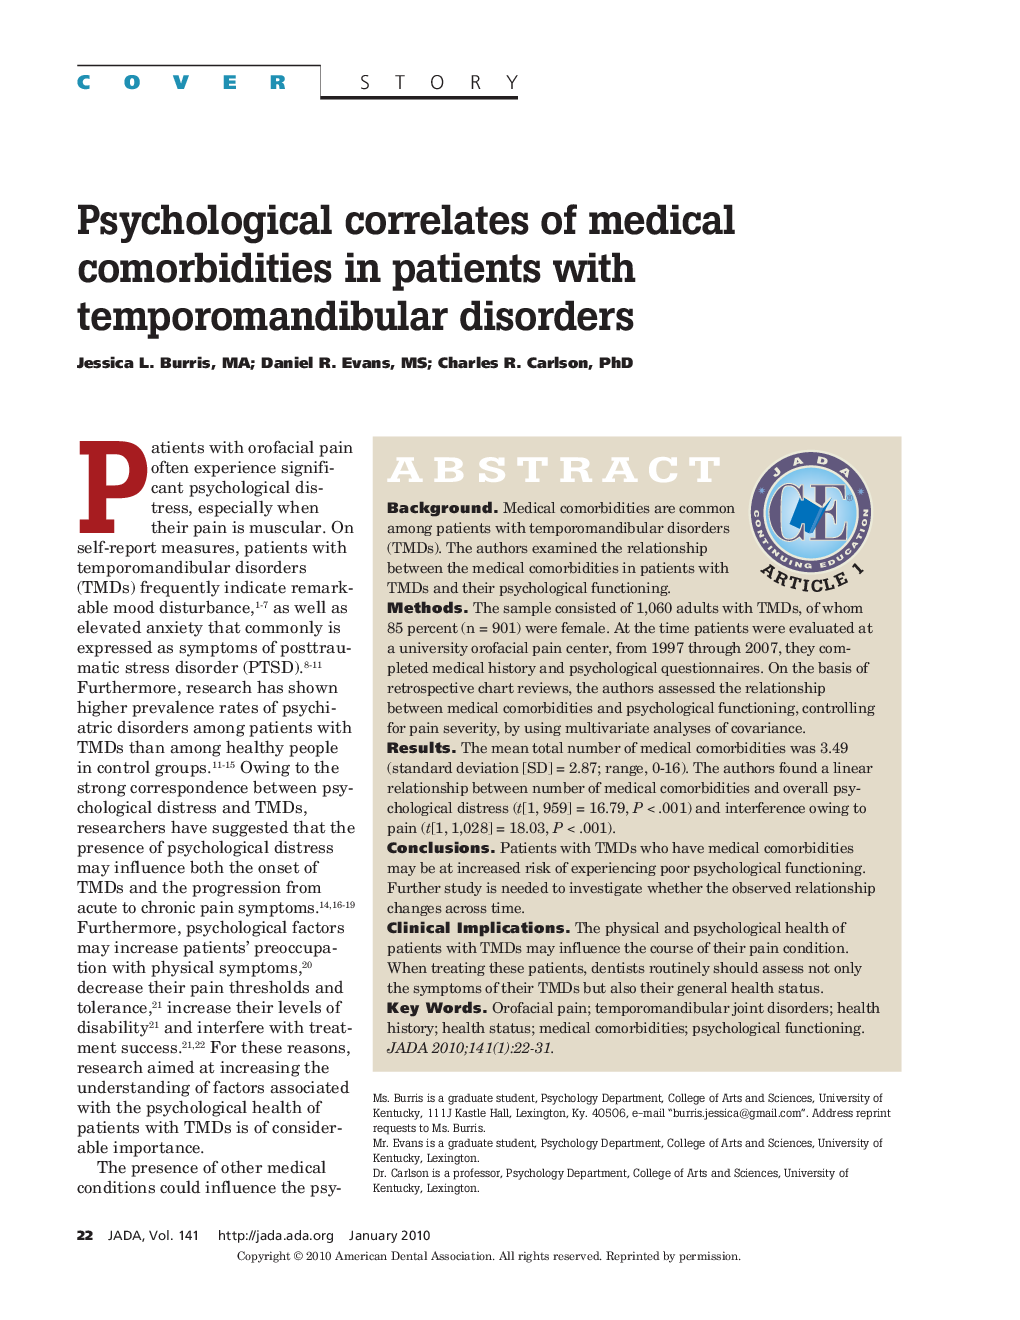 Psychological correlates of medical comorbidities in patients with temporomandibular disorders 